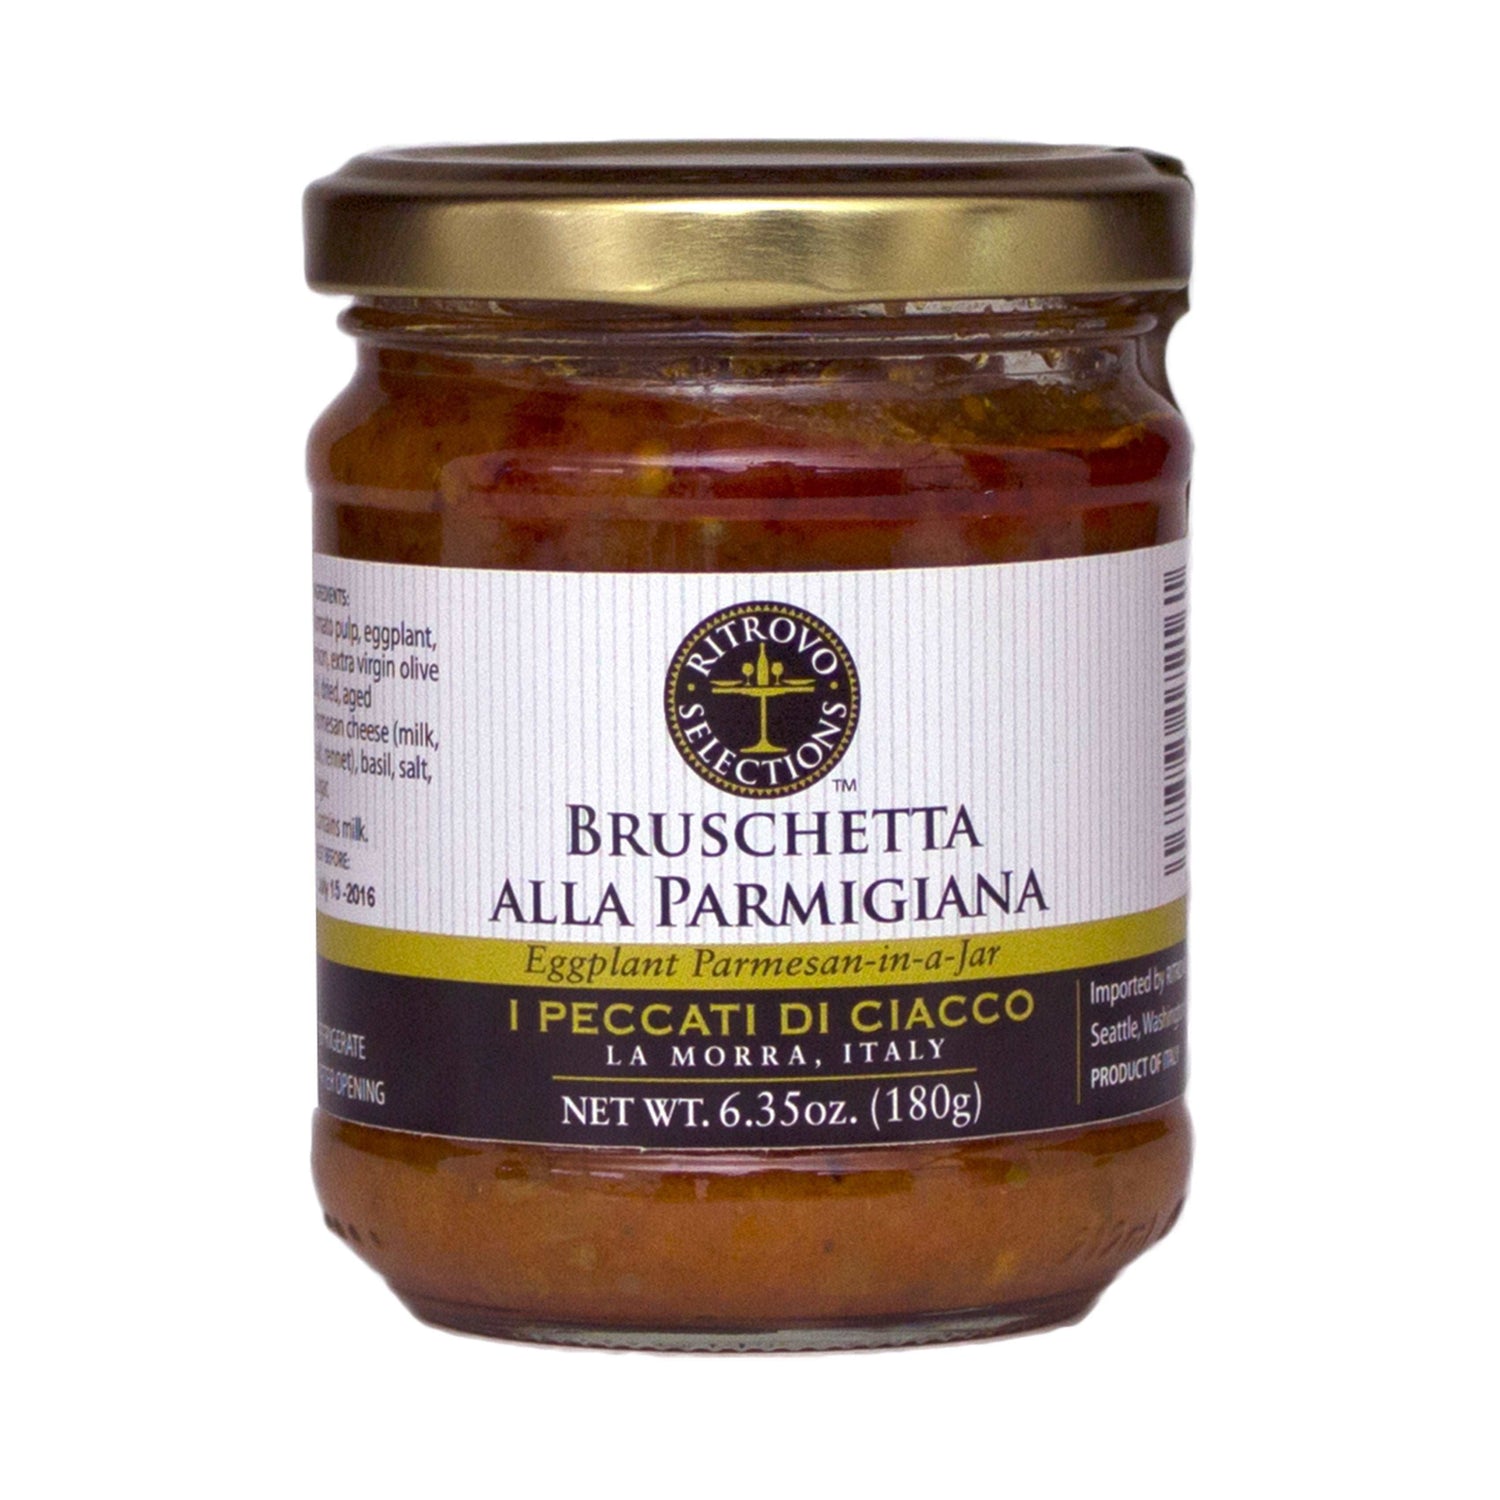 Ciacco Bruschetta Parmigiana -Tomato Sauce with Roasted Eggplant